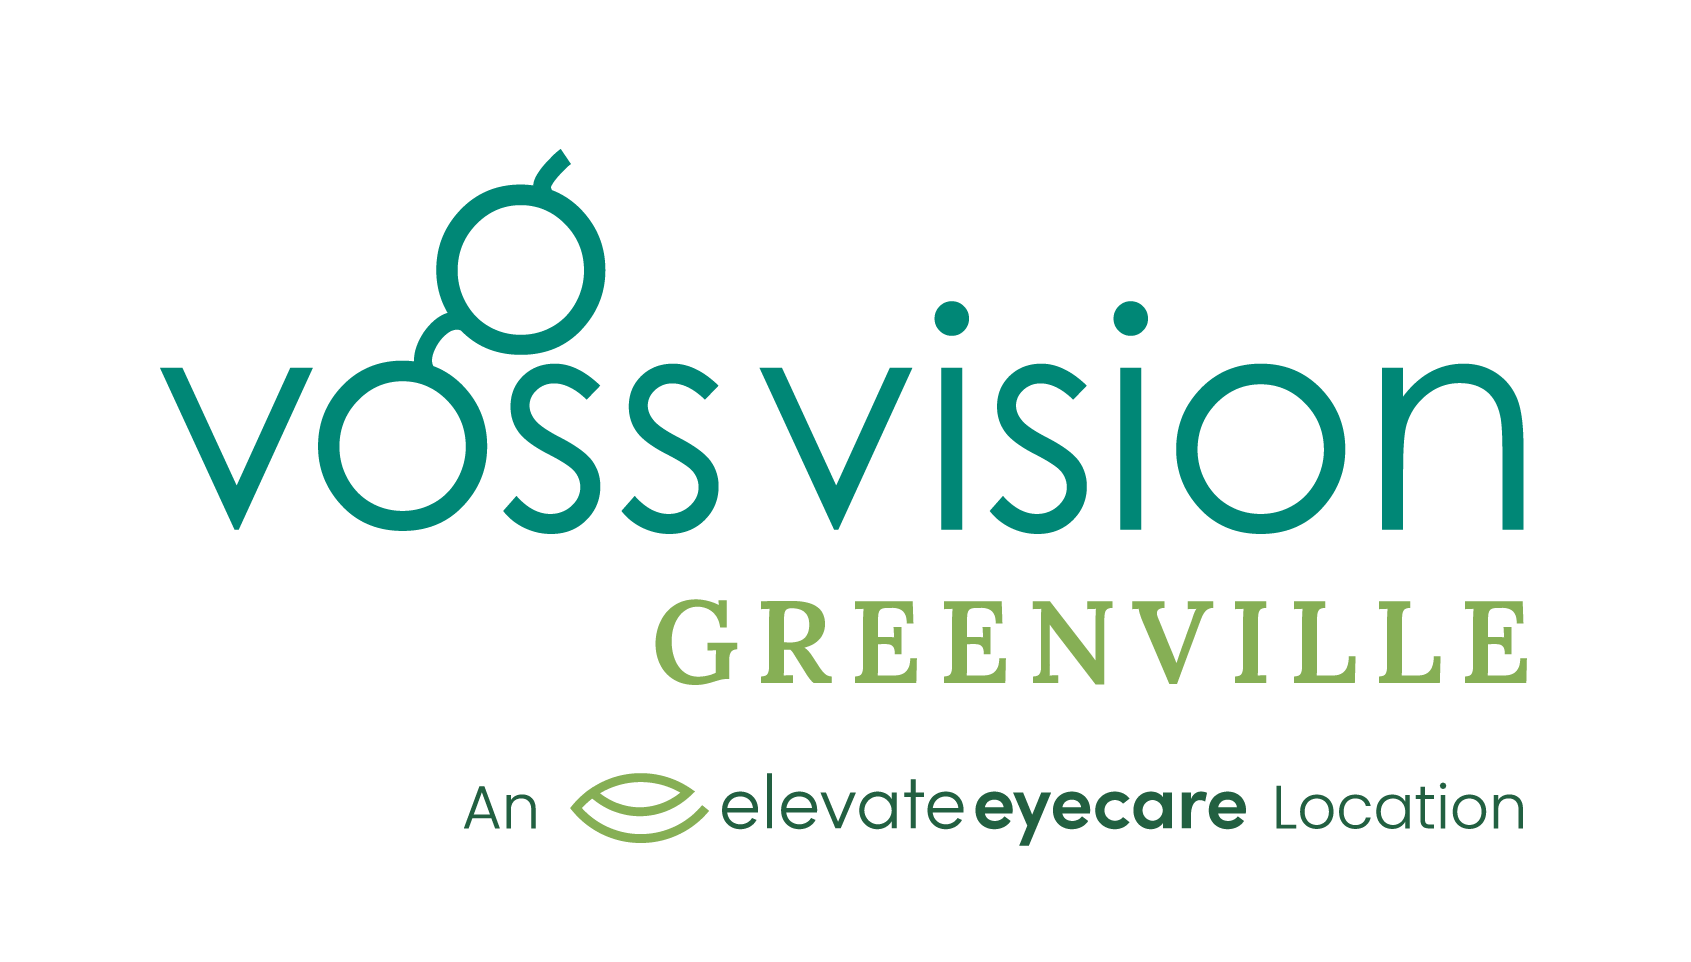 Voss vision greenville